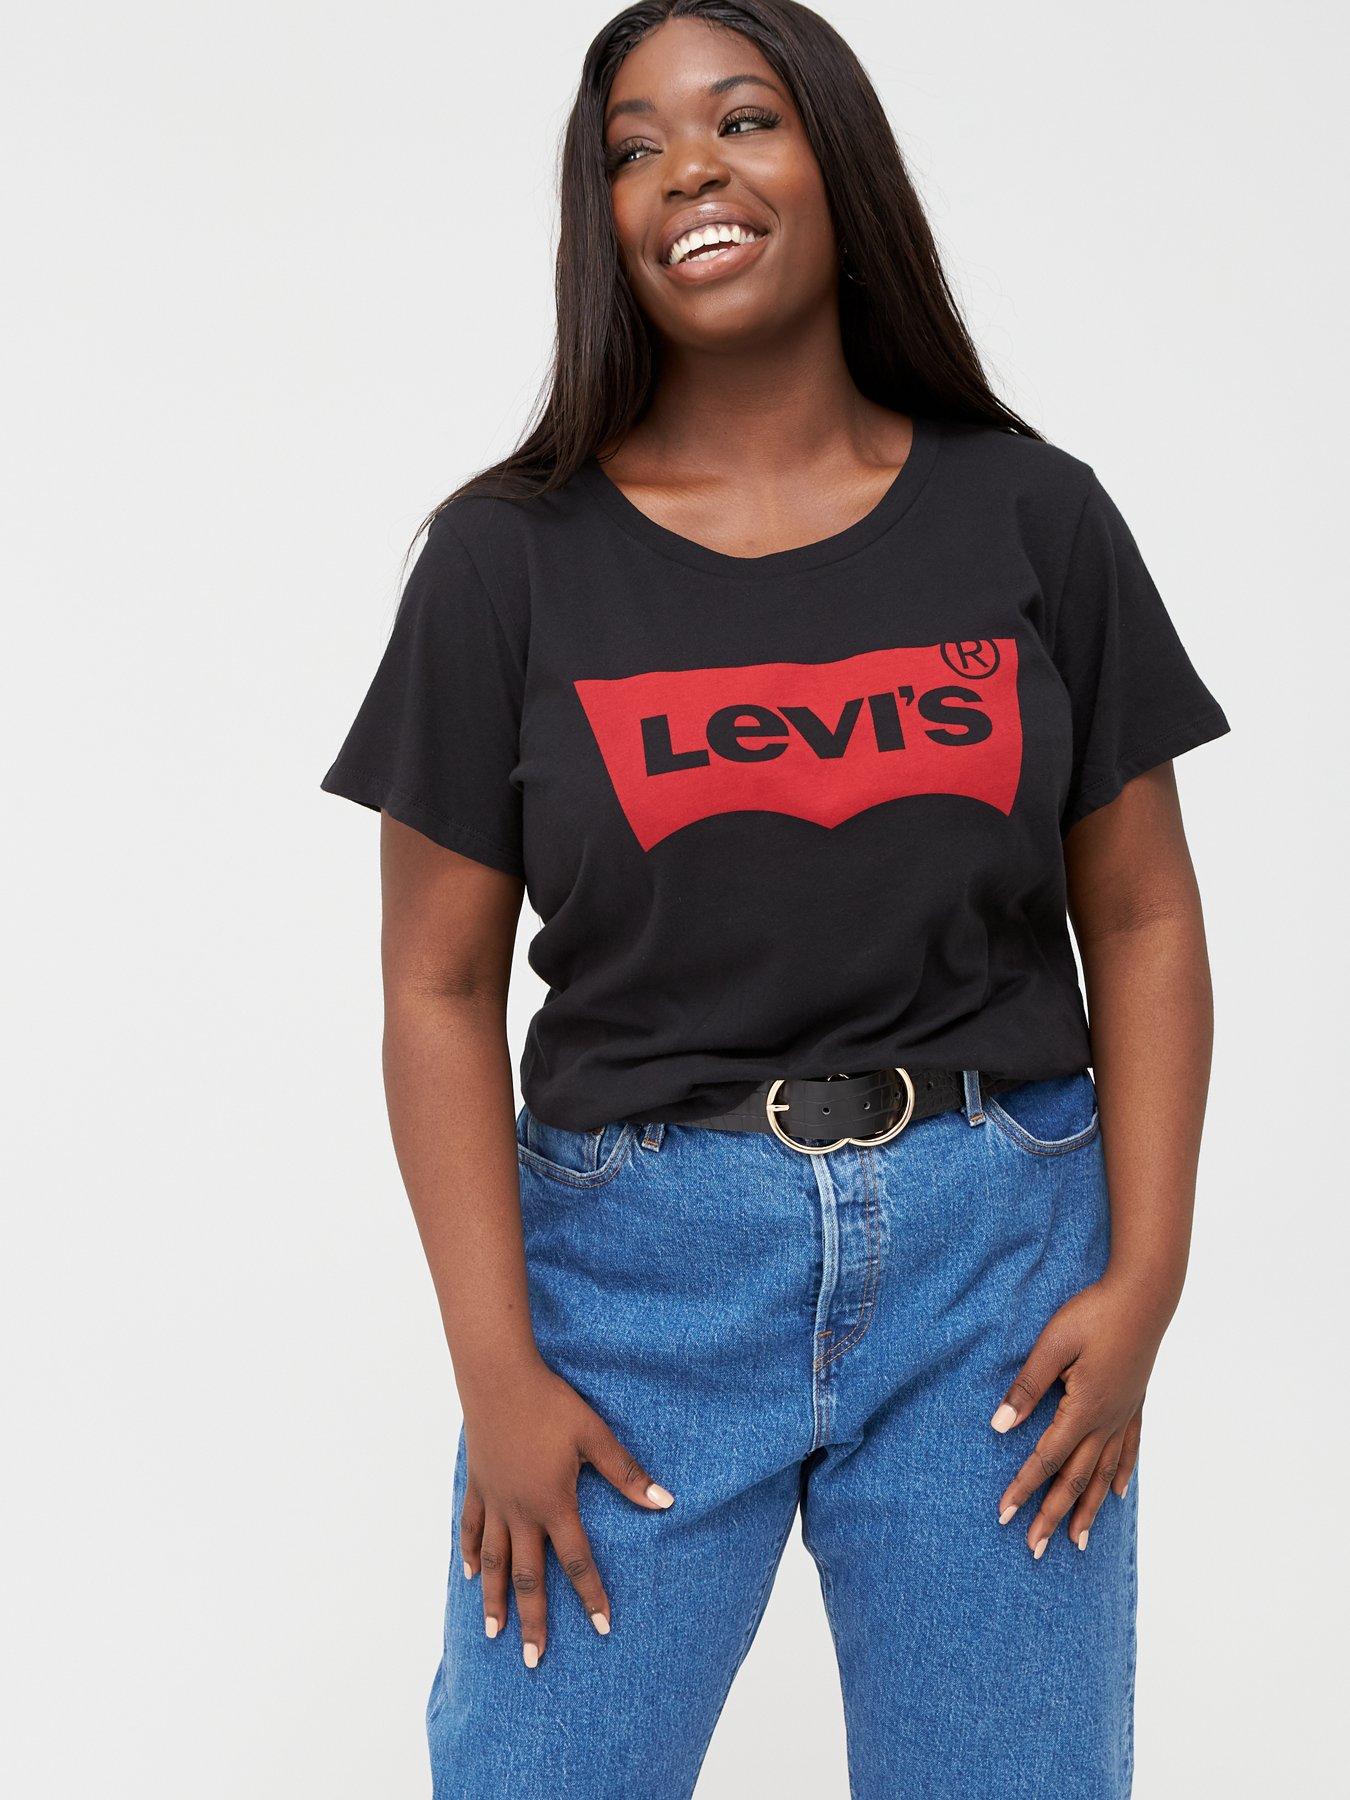 Levi's T-Shirts | Levi's Tops 